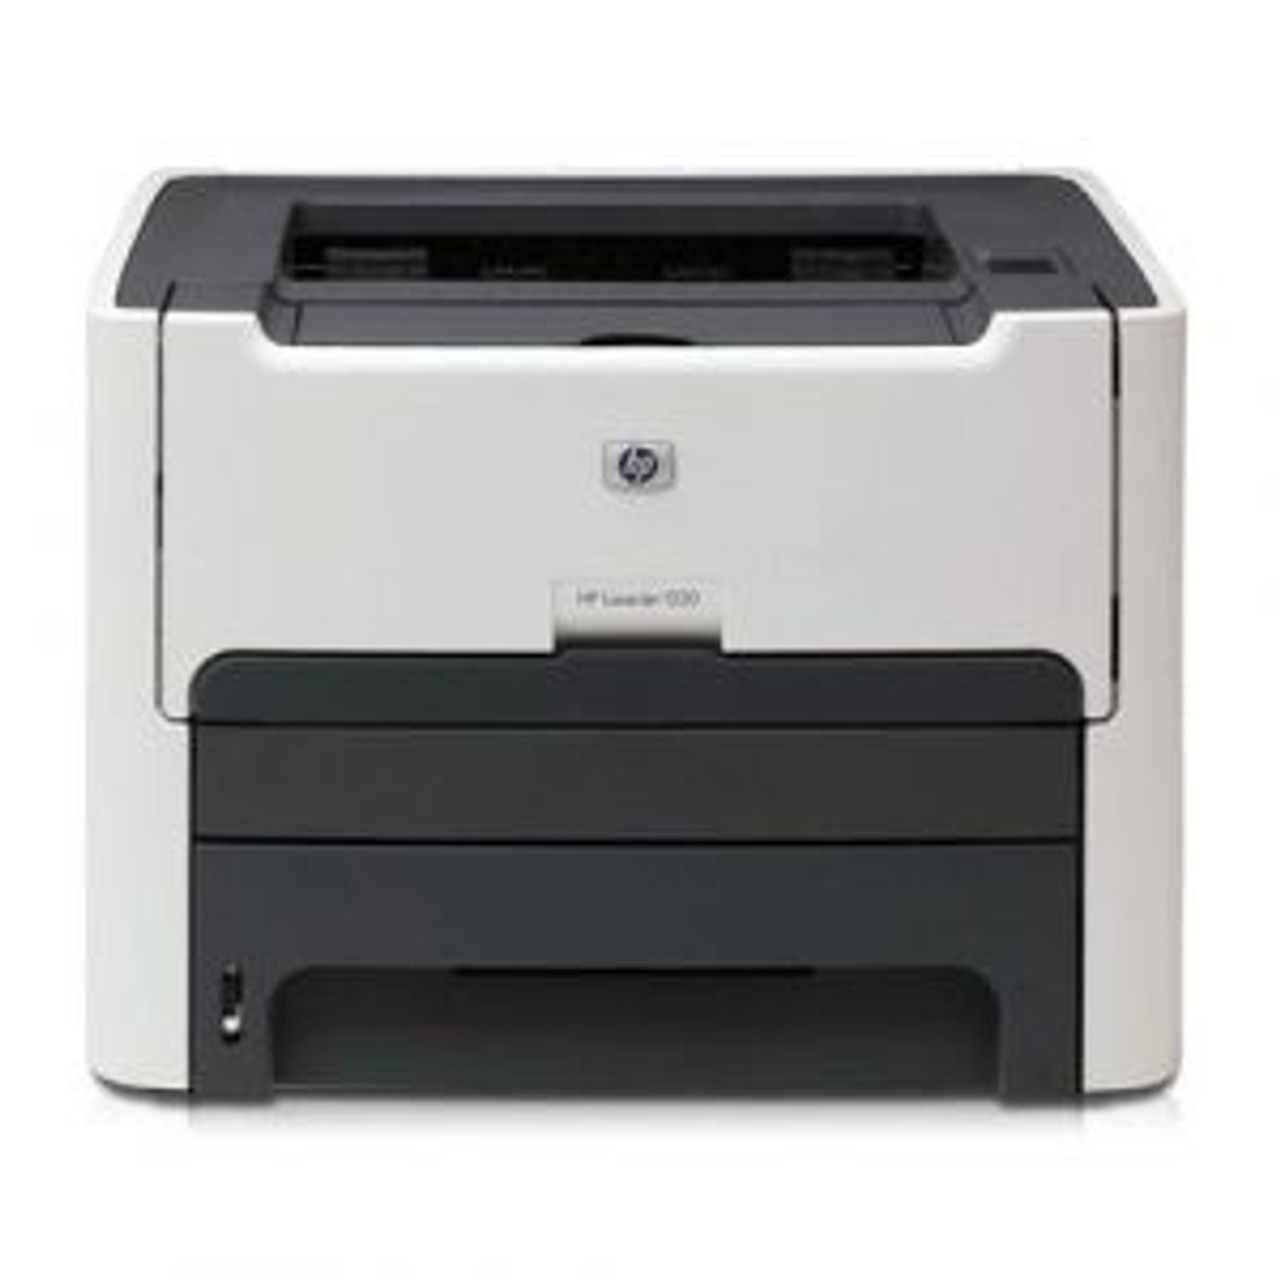 Q5928A HP LaserJet 1320N Black and White Laser Printer